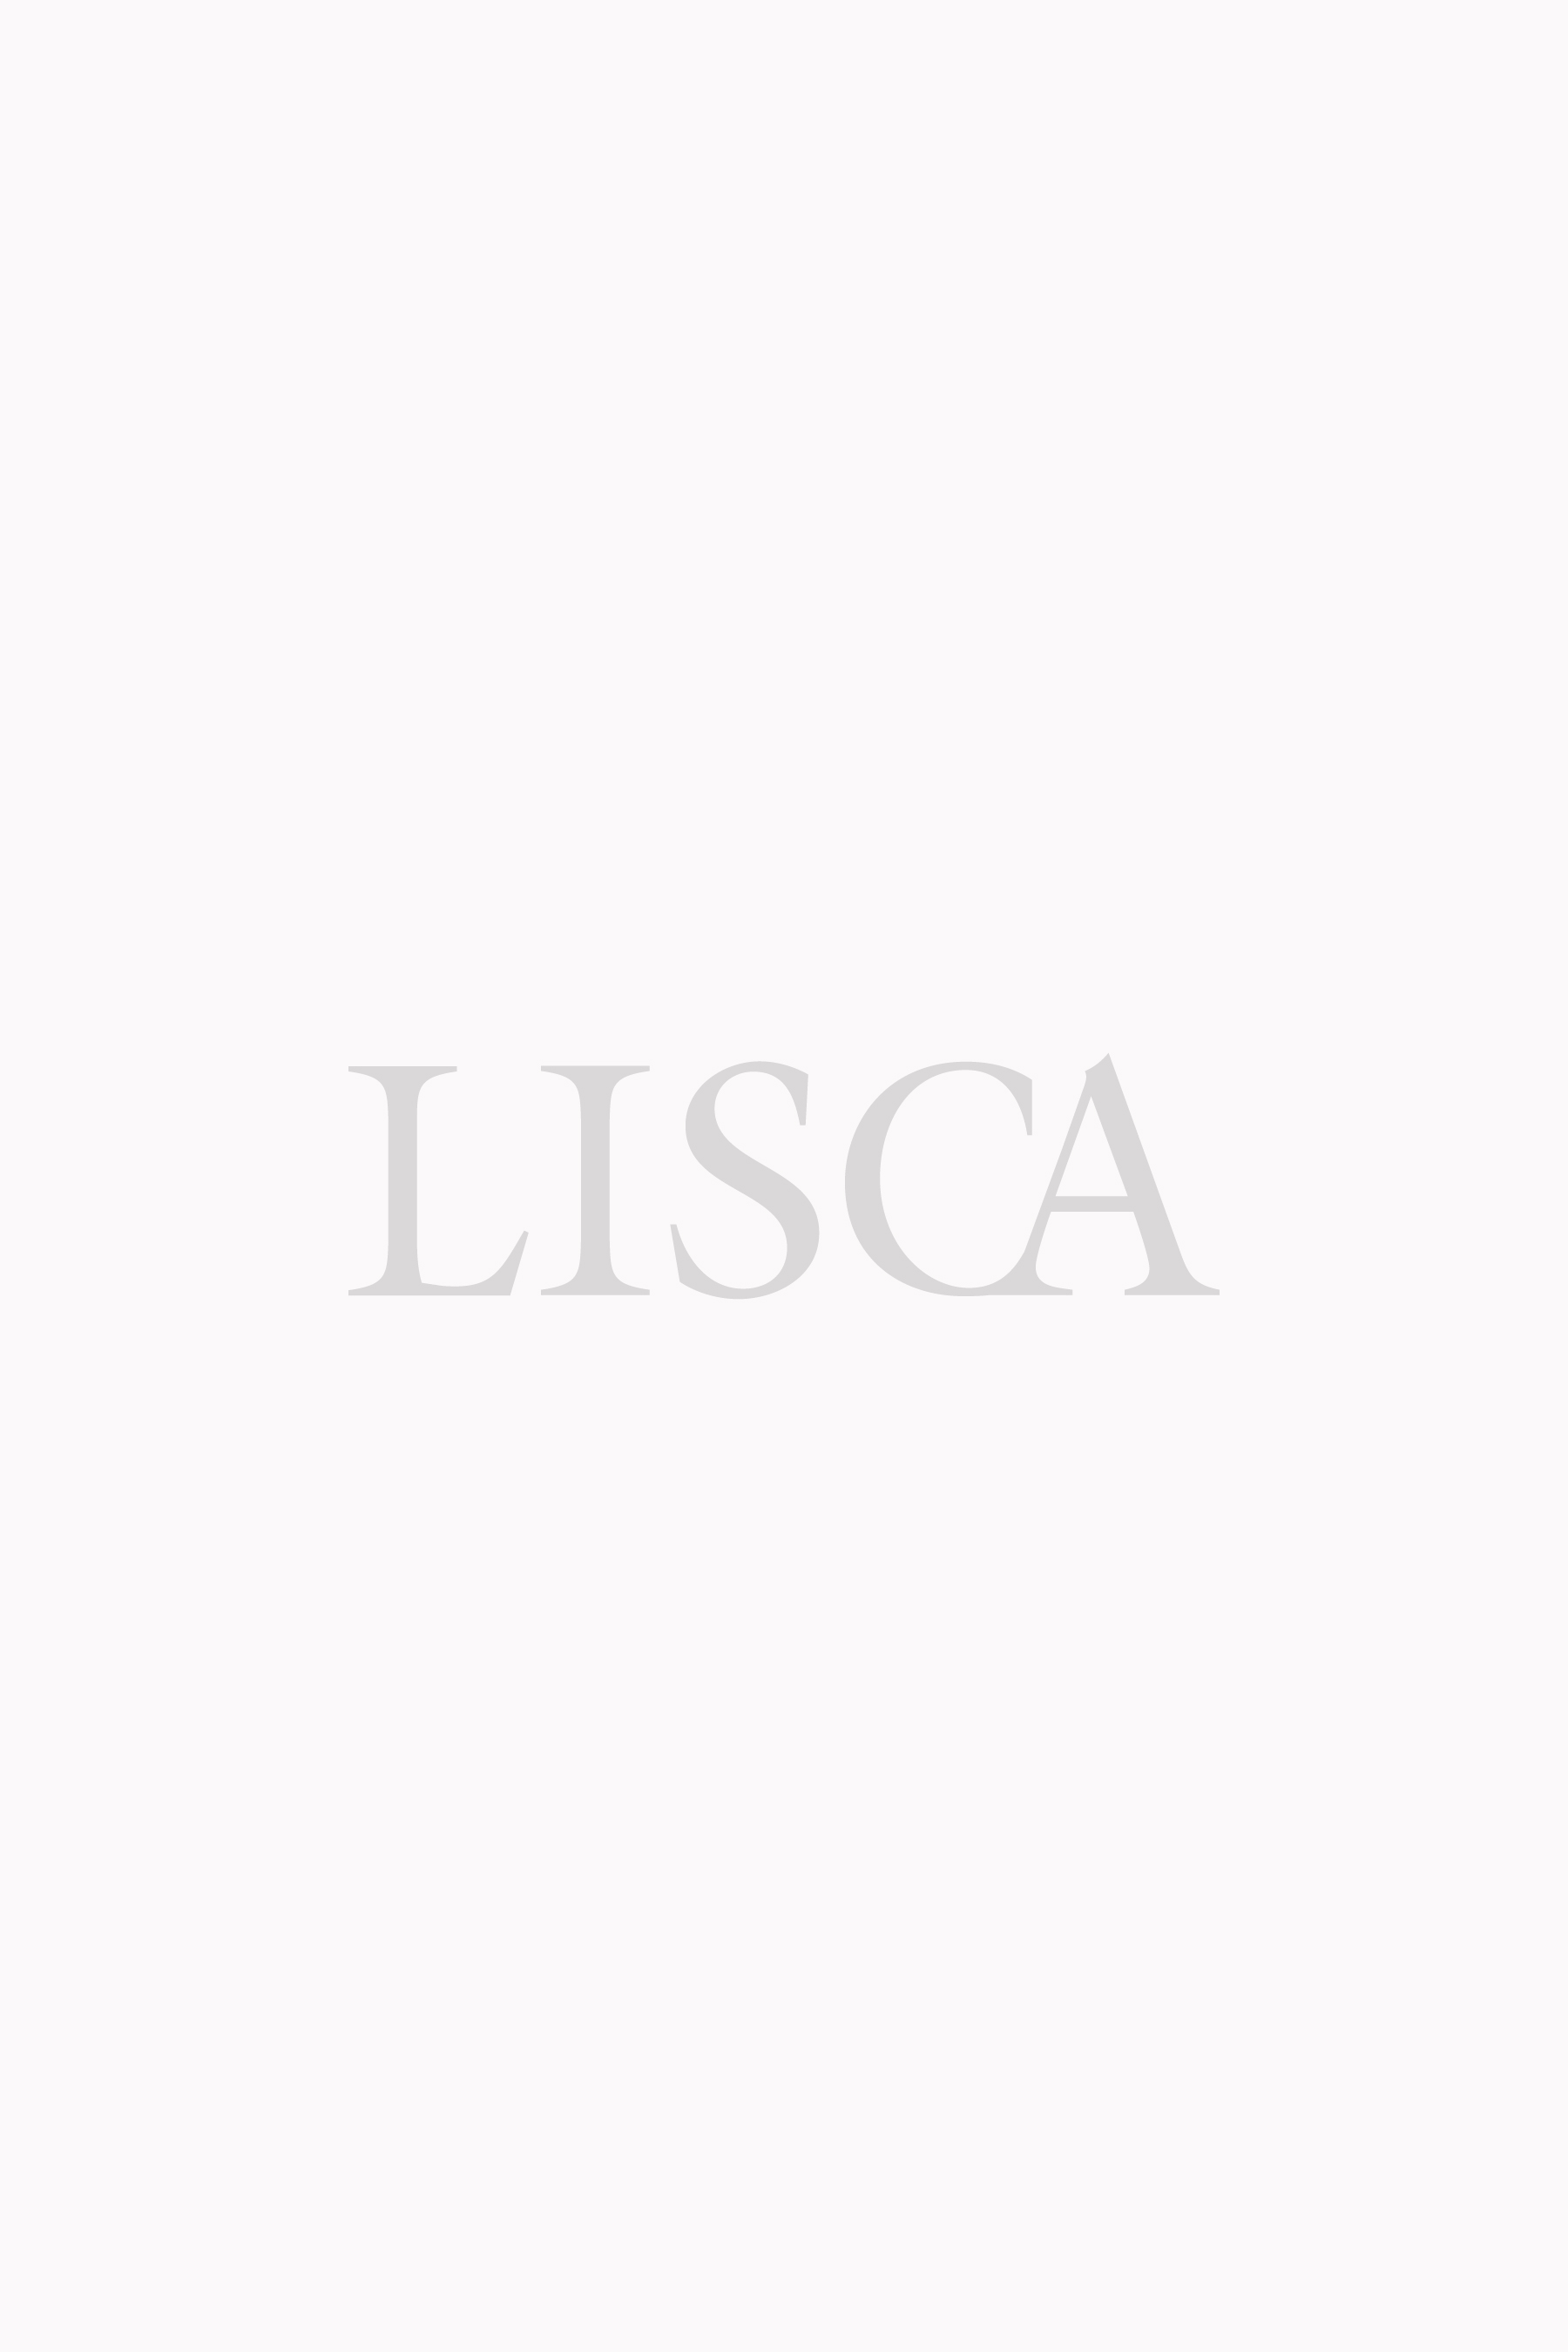 LiscaSummer - prize draw winning game 2017